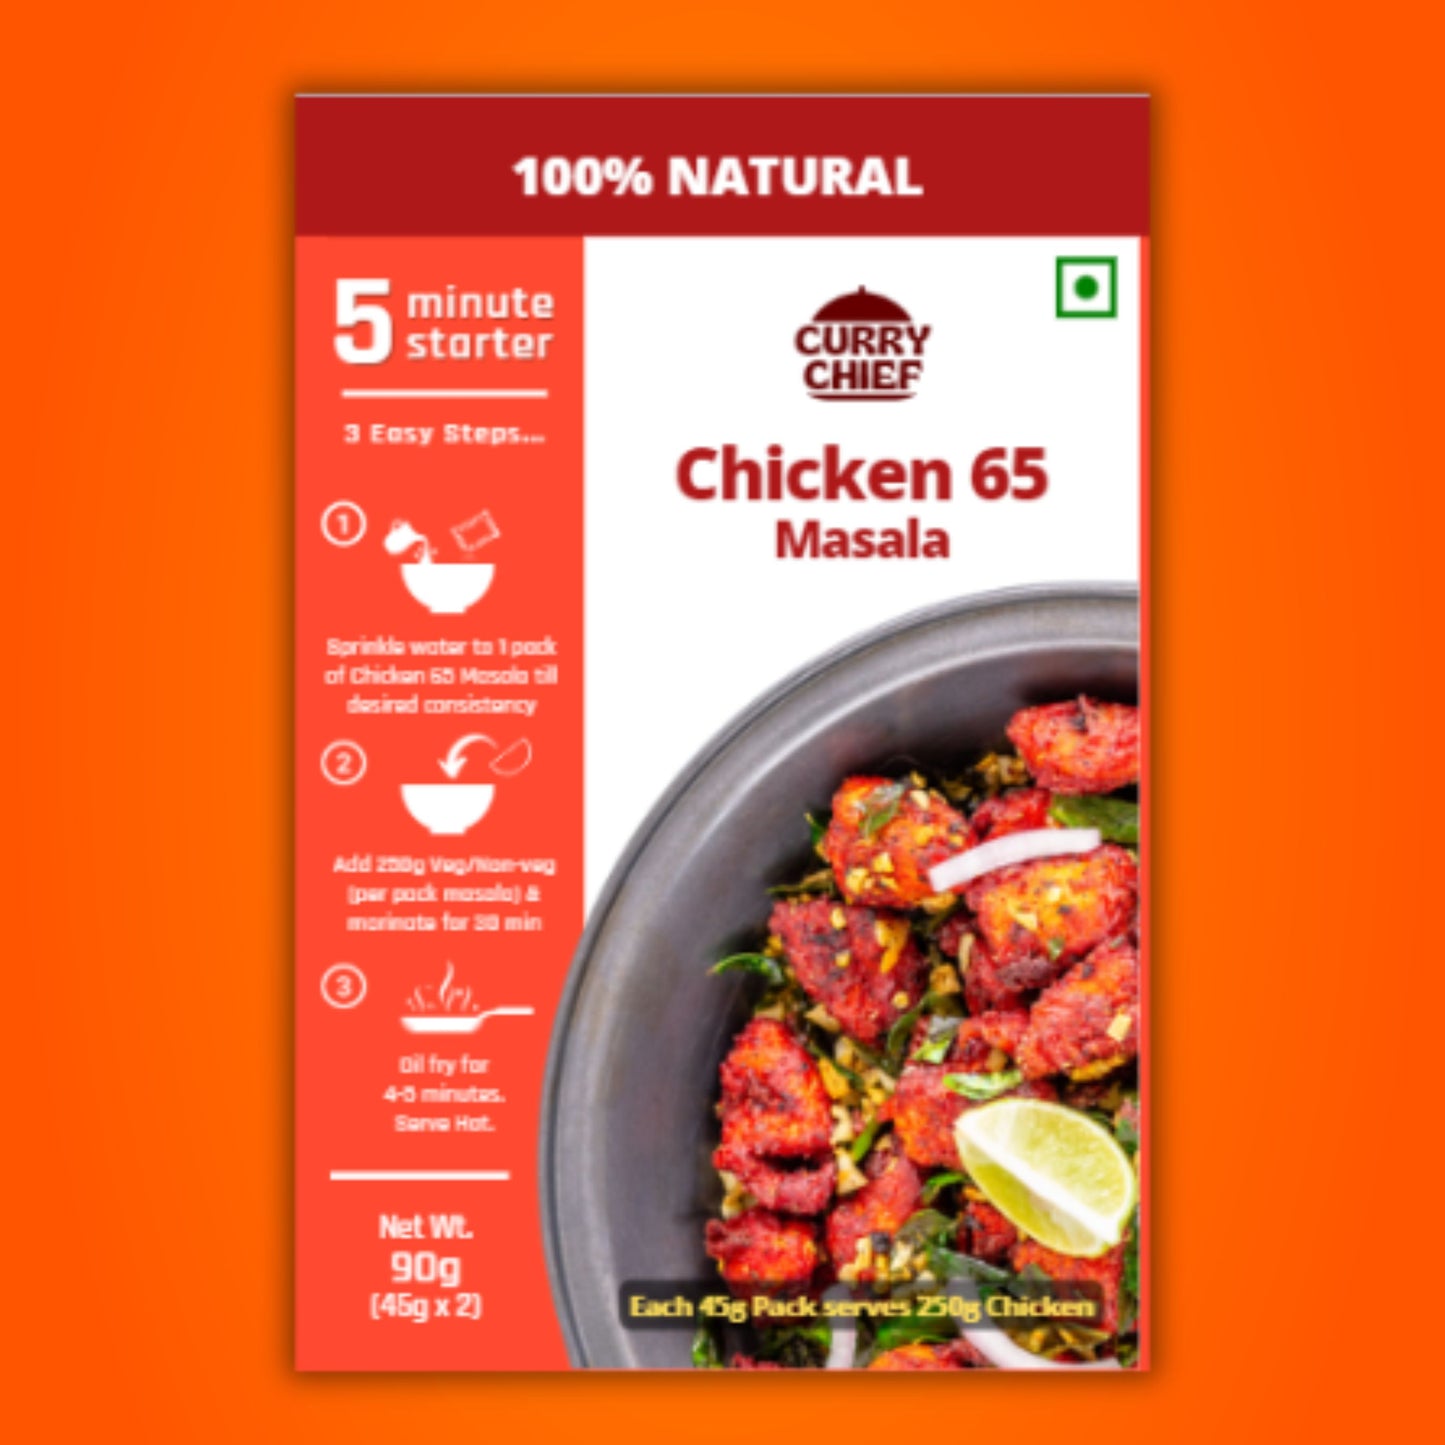 Free Gift - Chicken 65 Masala (45g)